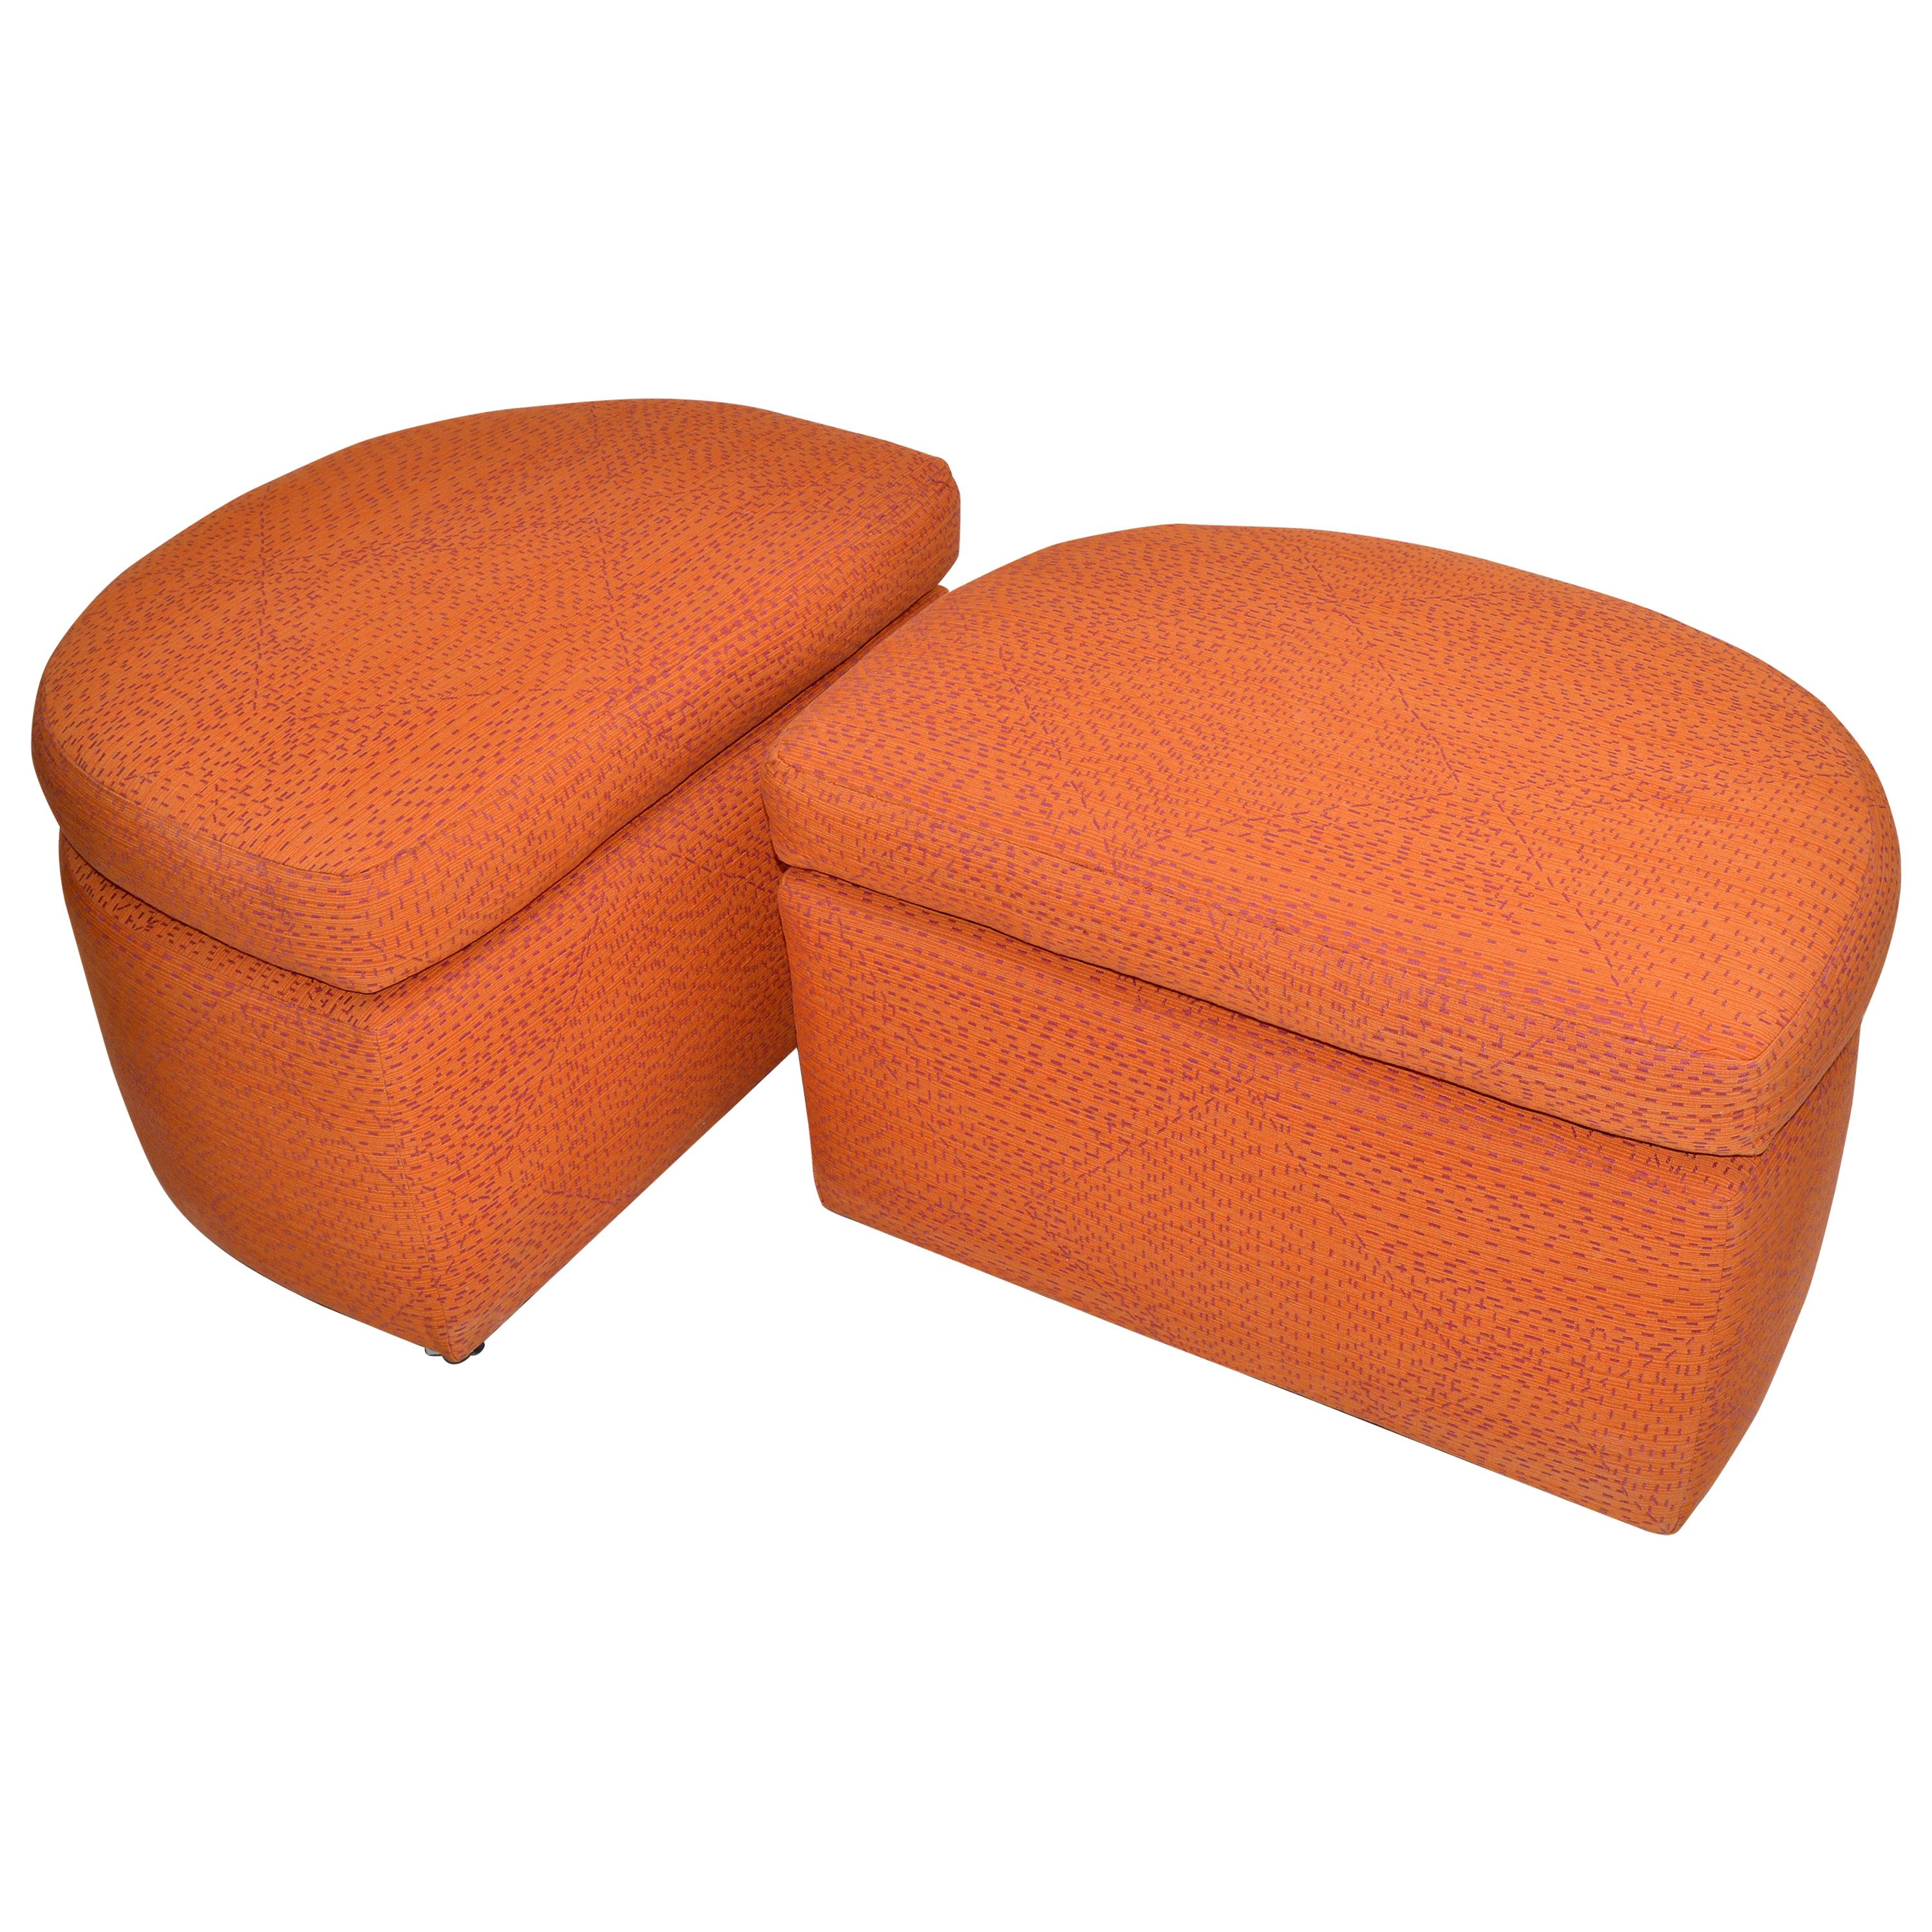 Mid-Century Modern Orange Cotton Upholstery Ottoman on Casters & Cushions - Pair